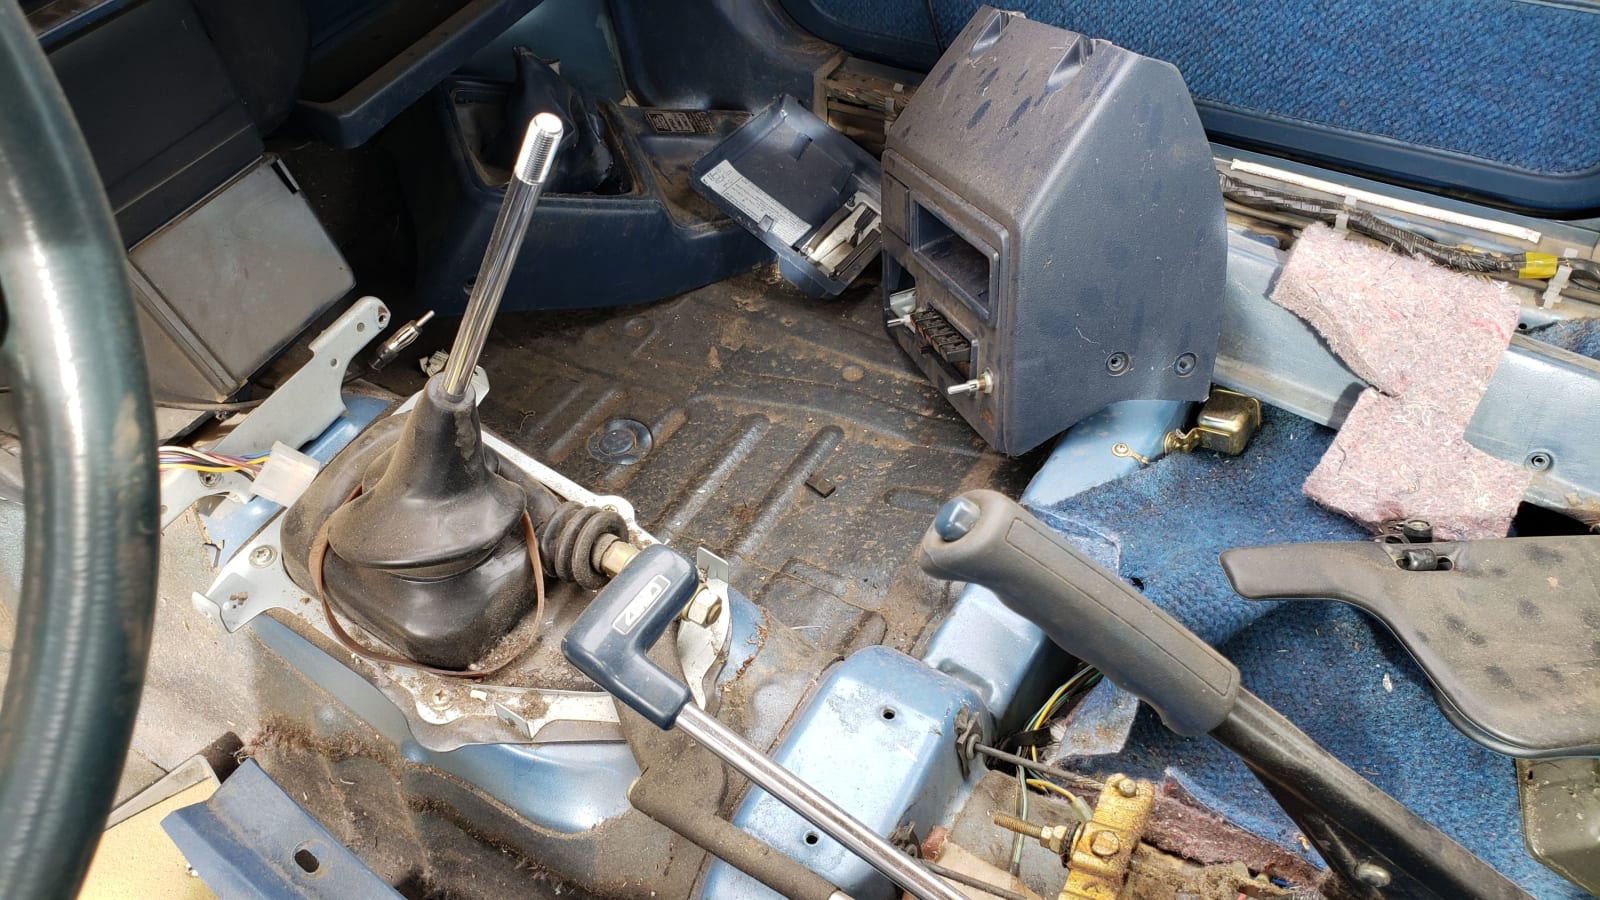 09 1981 Subaru Wagon in Colorado junkyard Photo by Murilee Martin